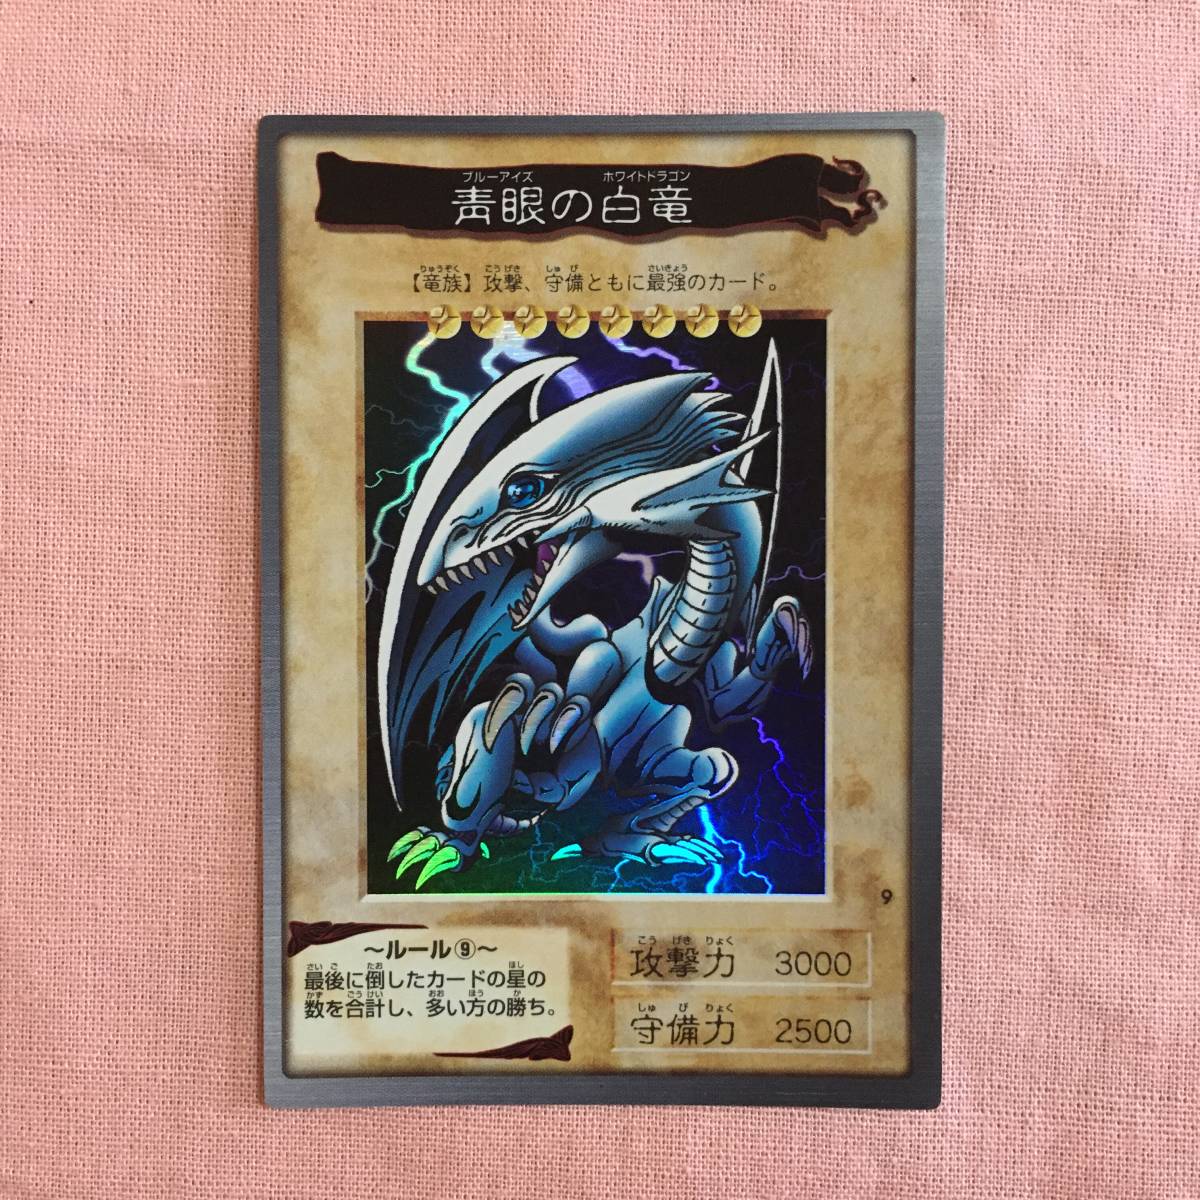 BANDAI 東映版 遊戯王 青眼の白竜 遊戯王 カード バンダイ 1998 Yu-Gi-Oh!